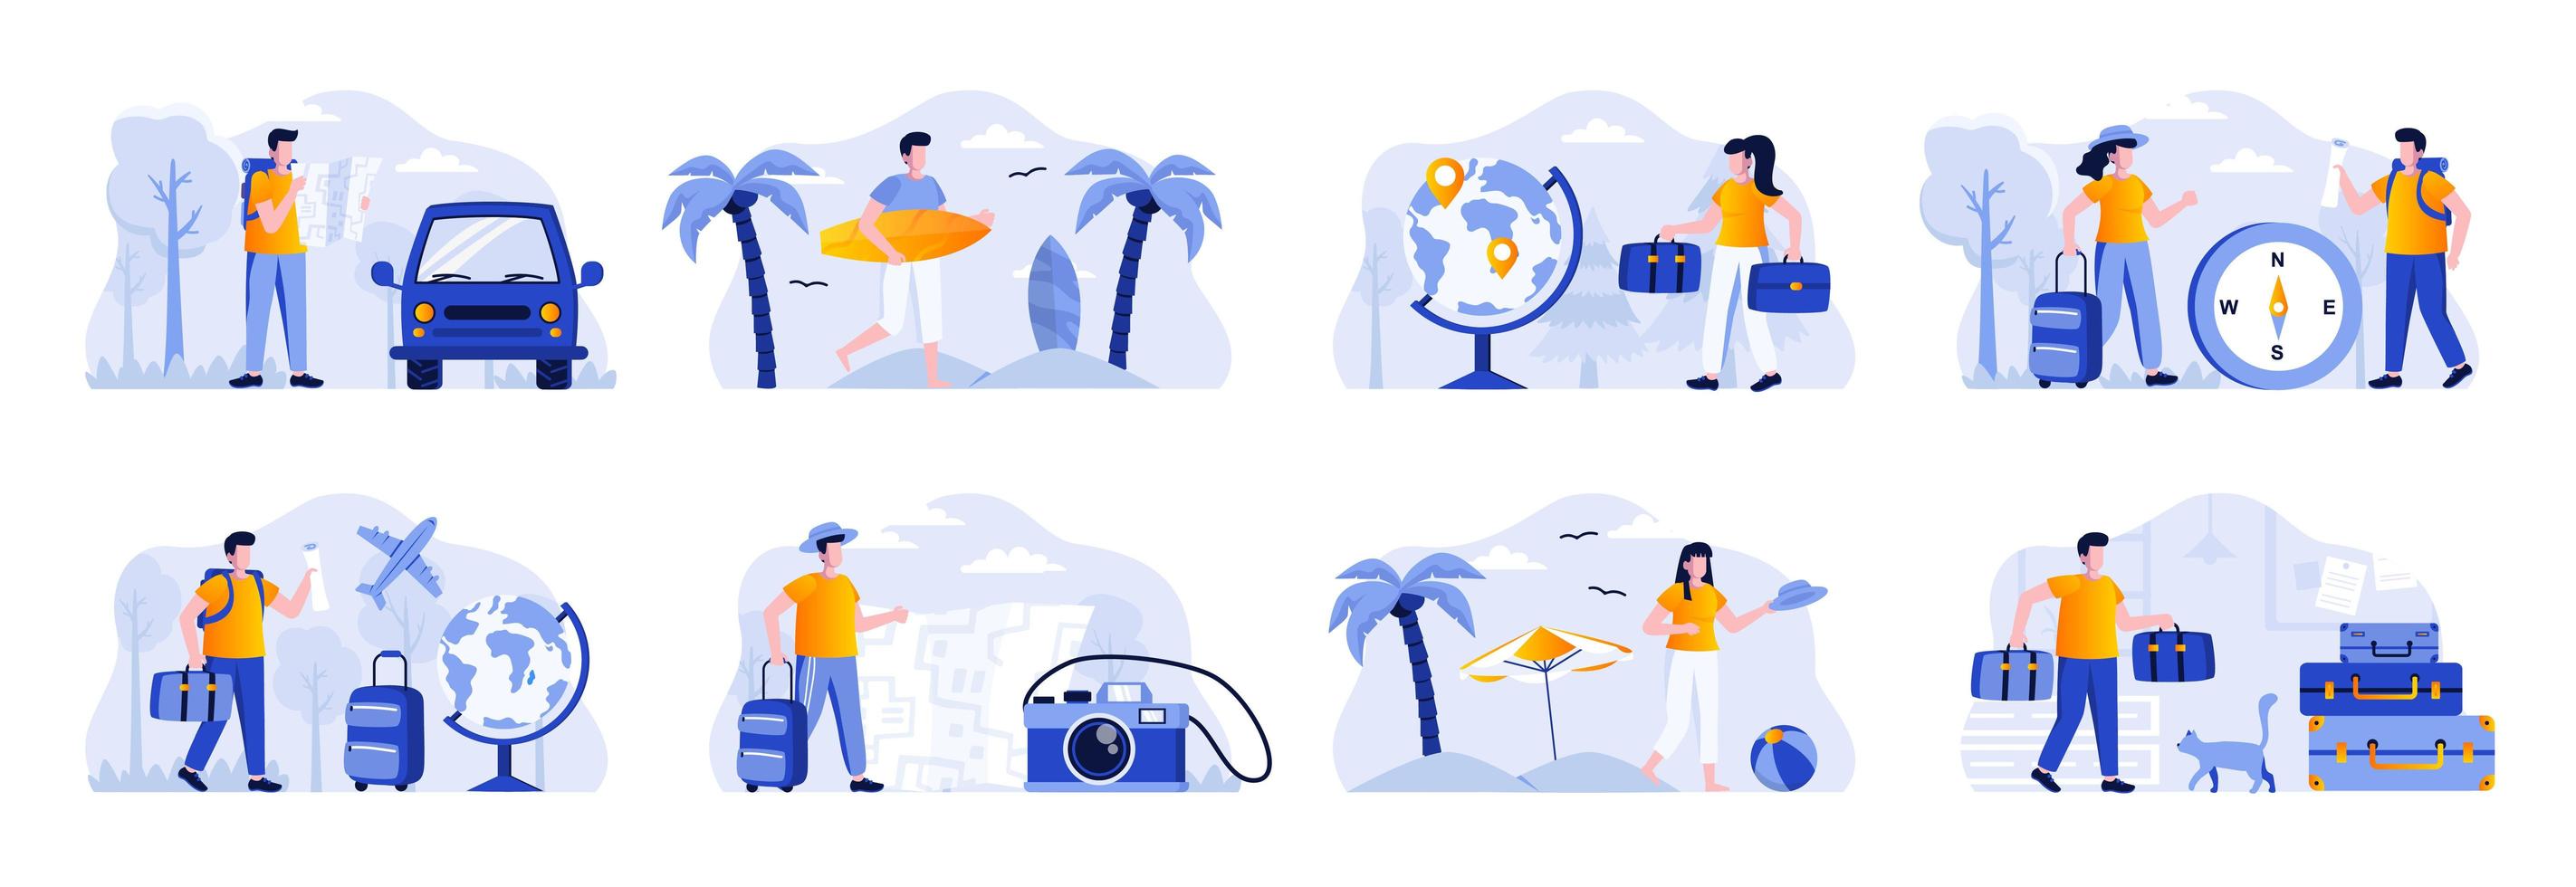 Travel vacation scenes bundle with people vector